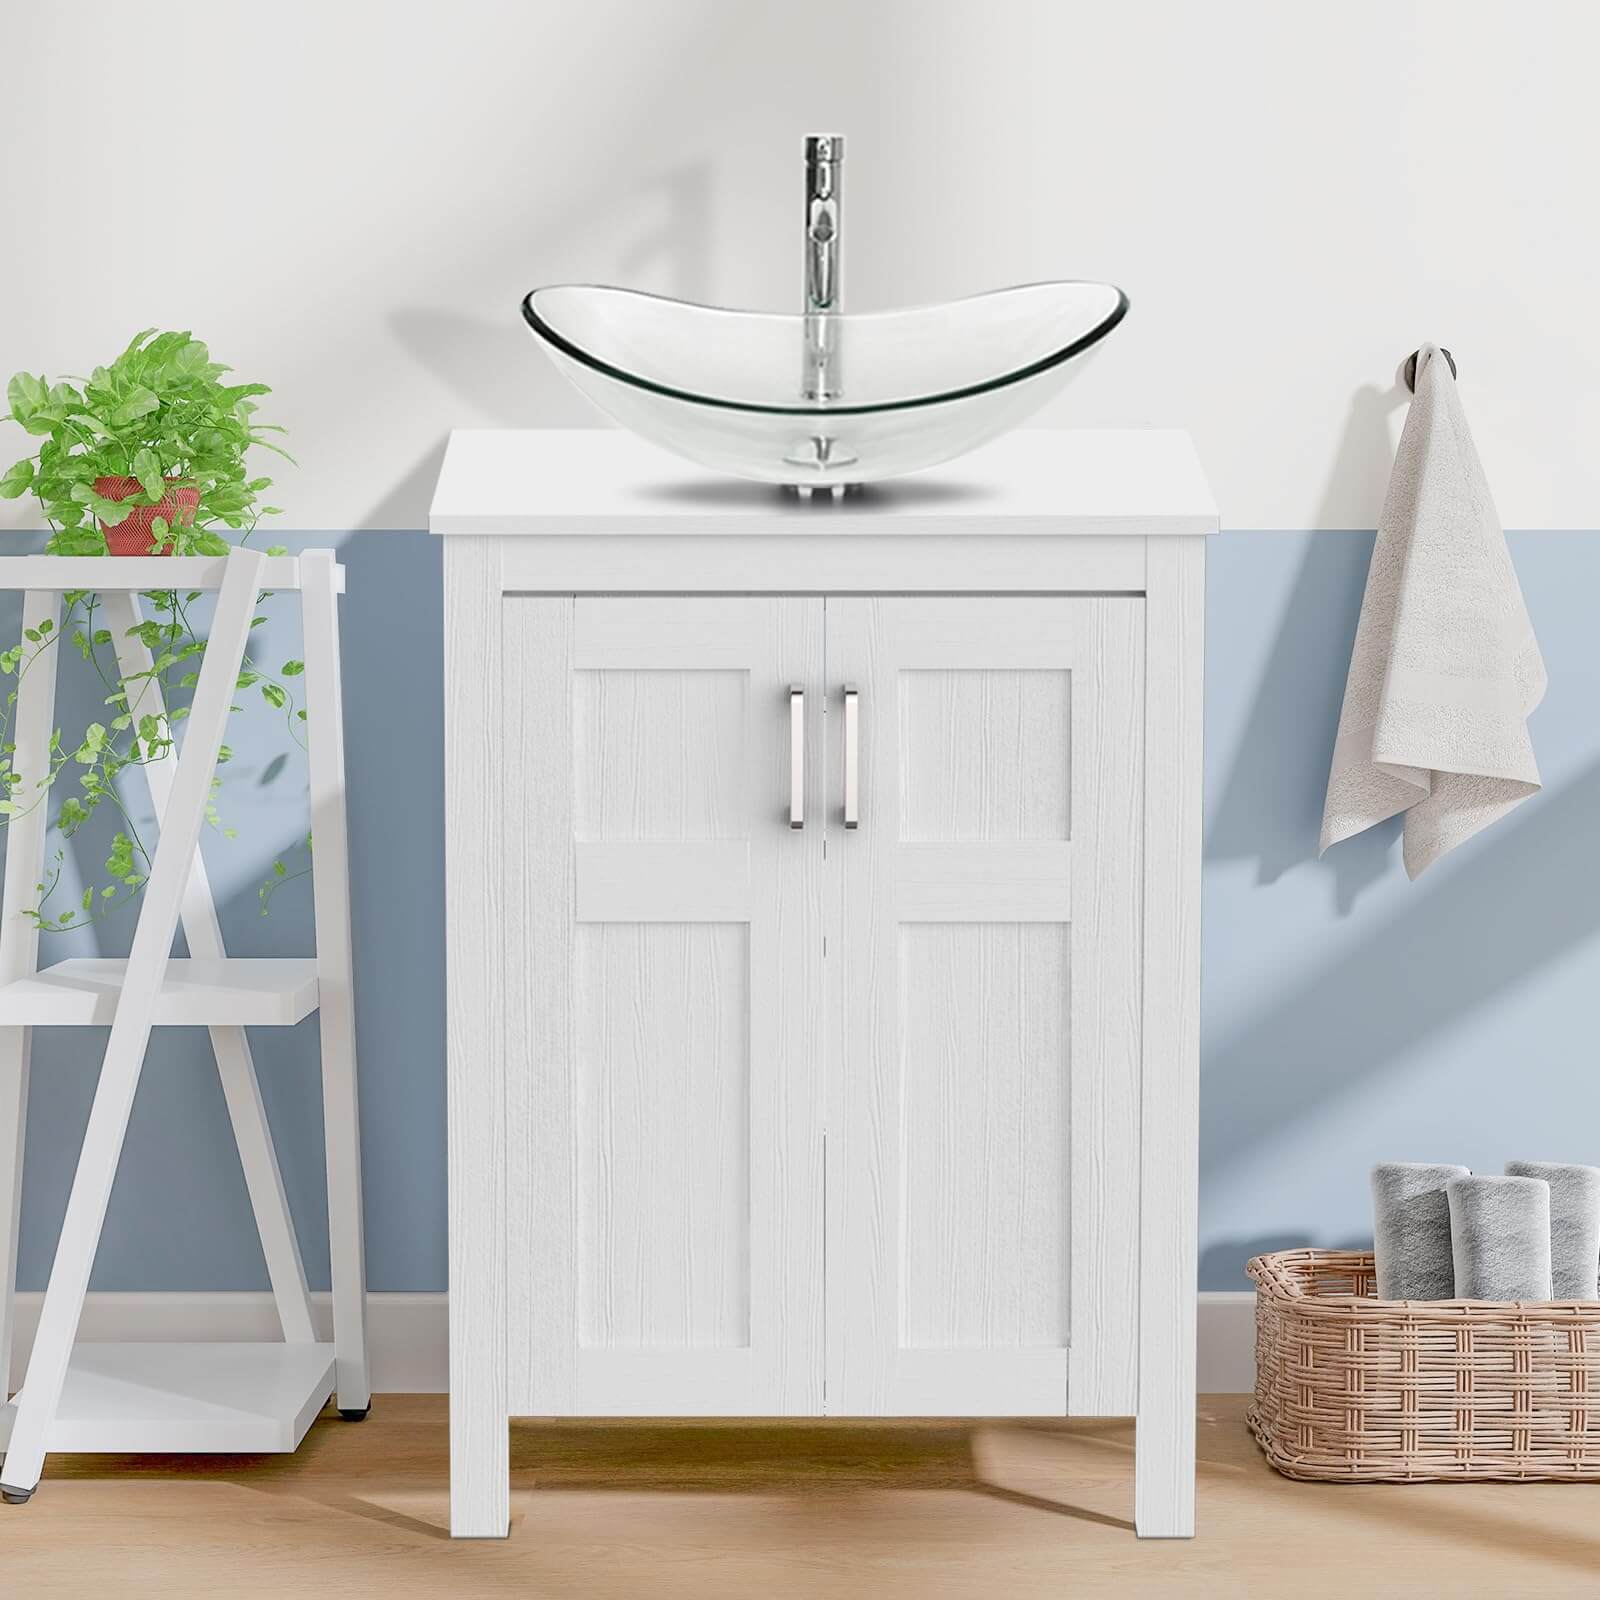 Elecwish white bathroom vanity with clear boat sink set HW1120-WH display scene